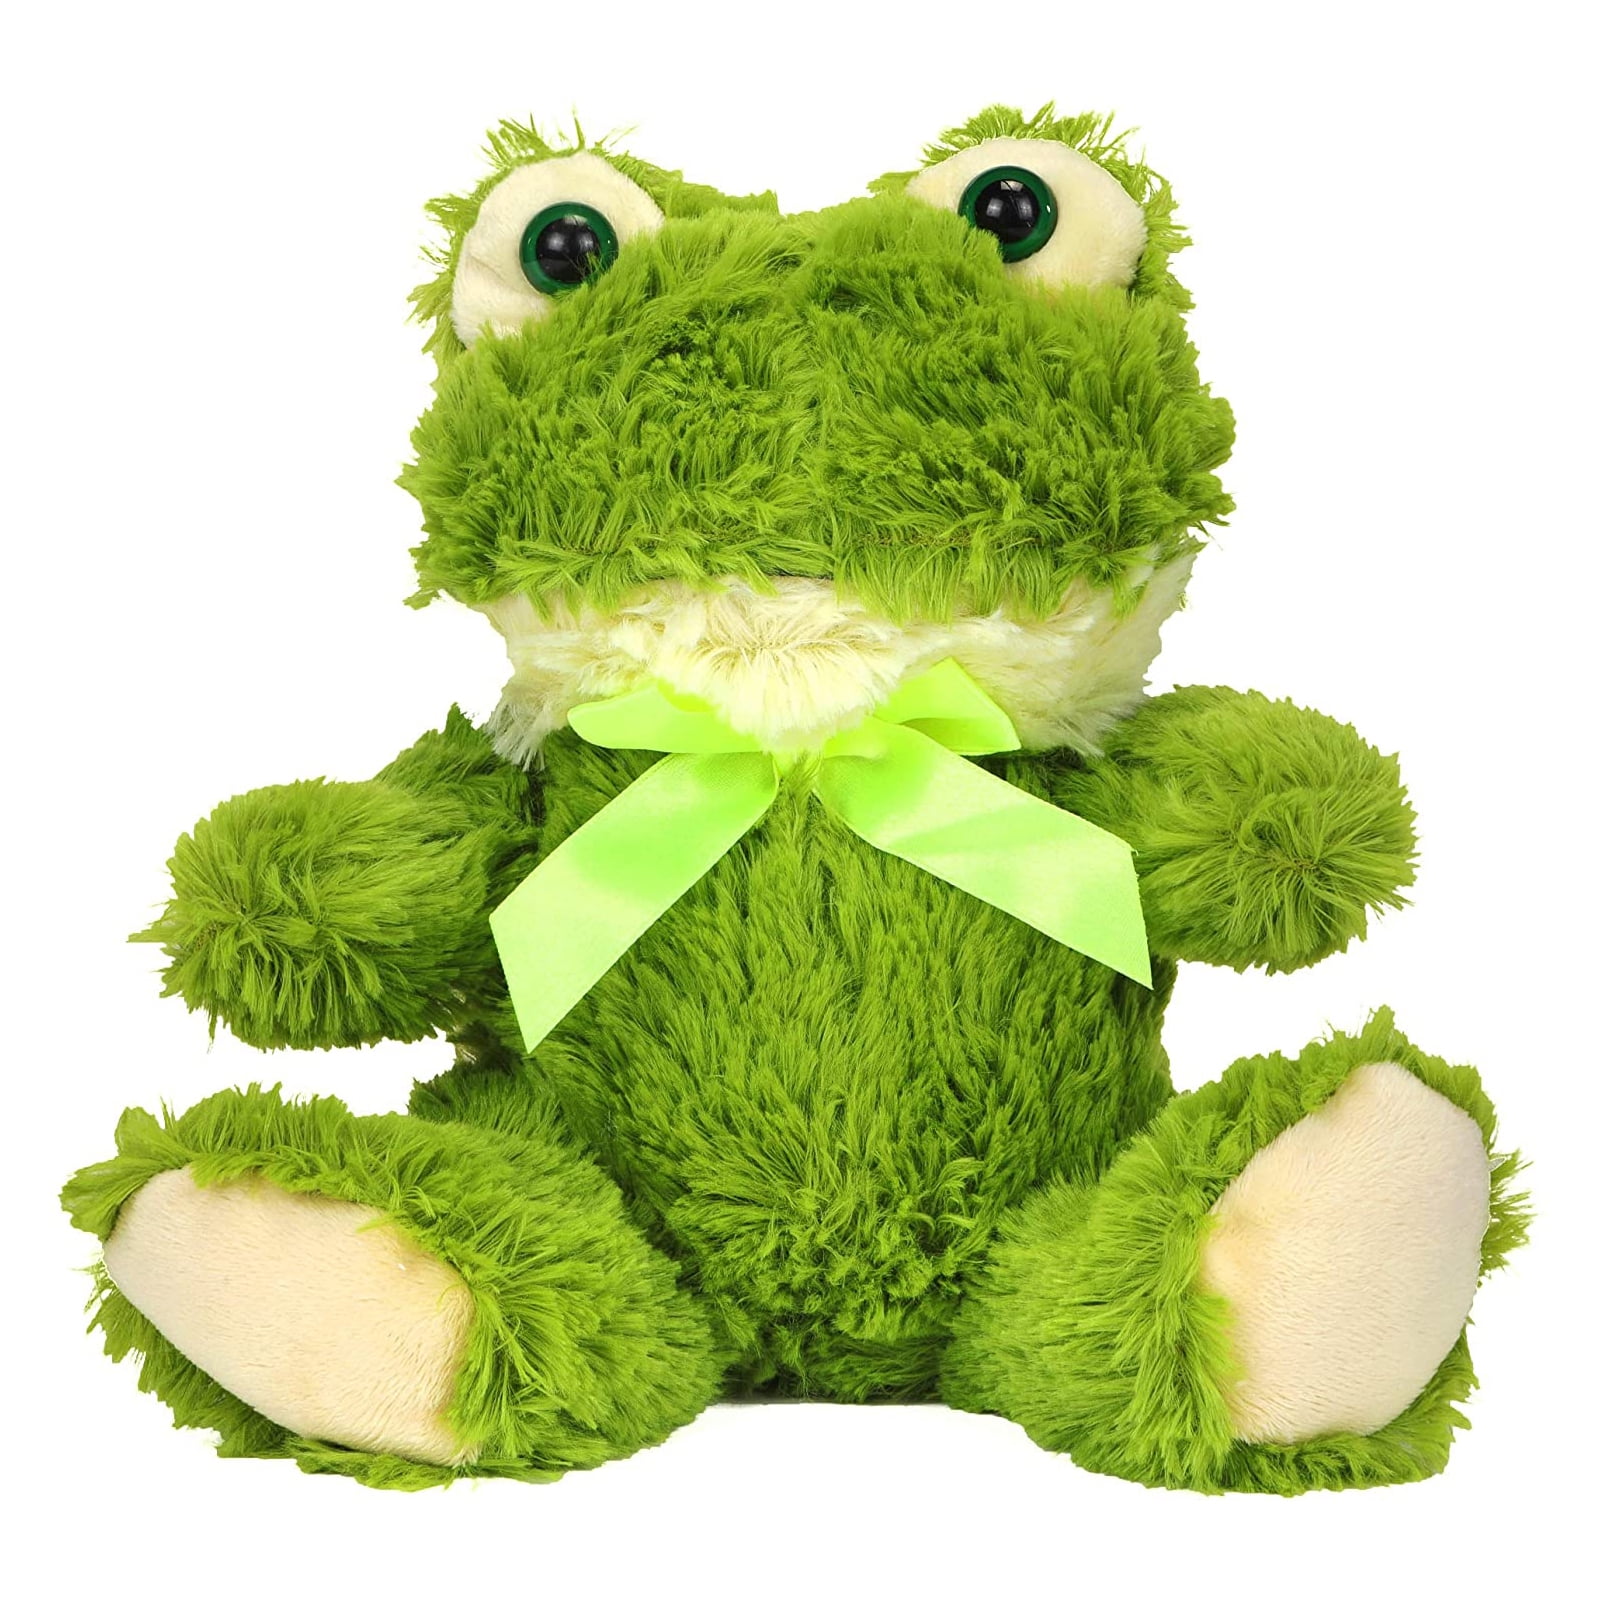 Plush giant frog stuffed animal soft toy, 29 inches large 